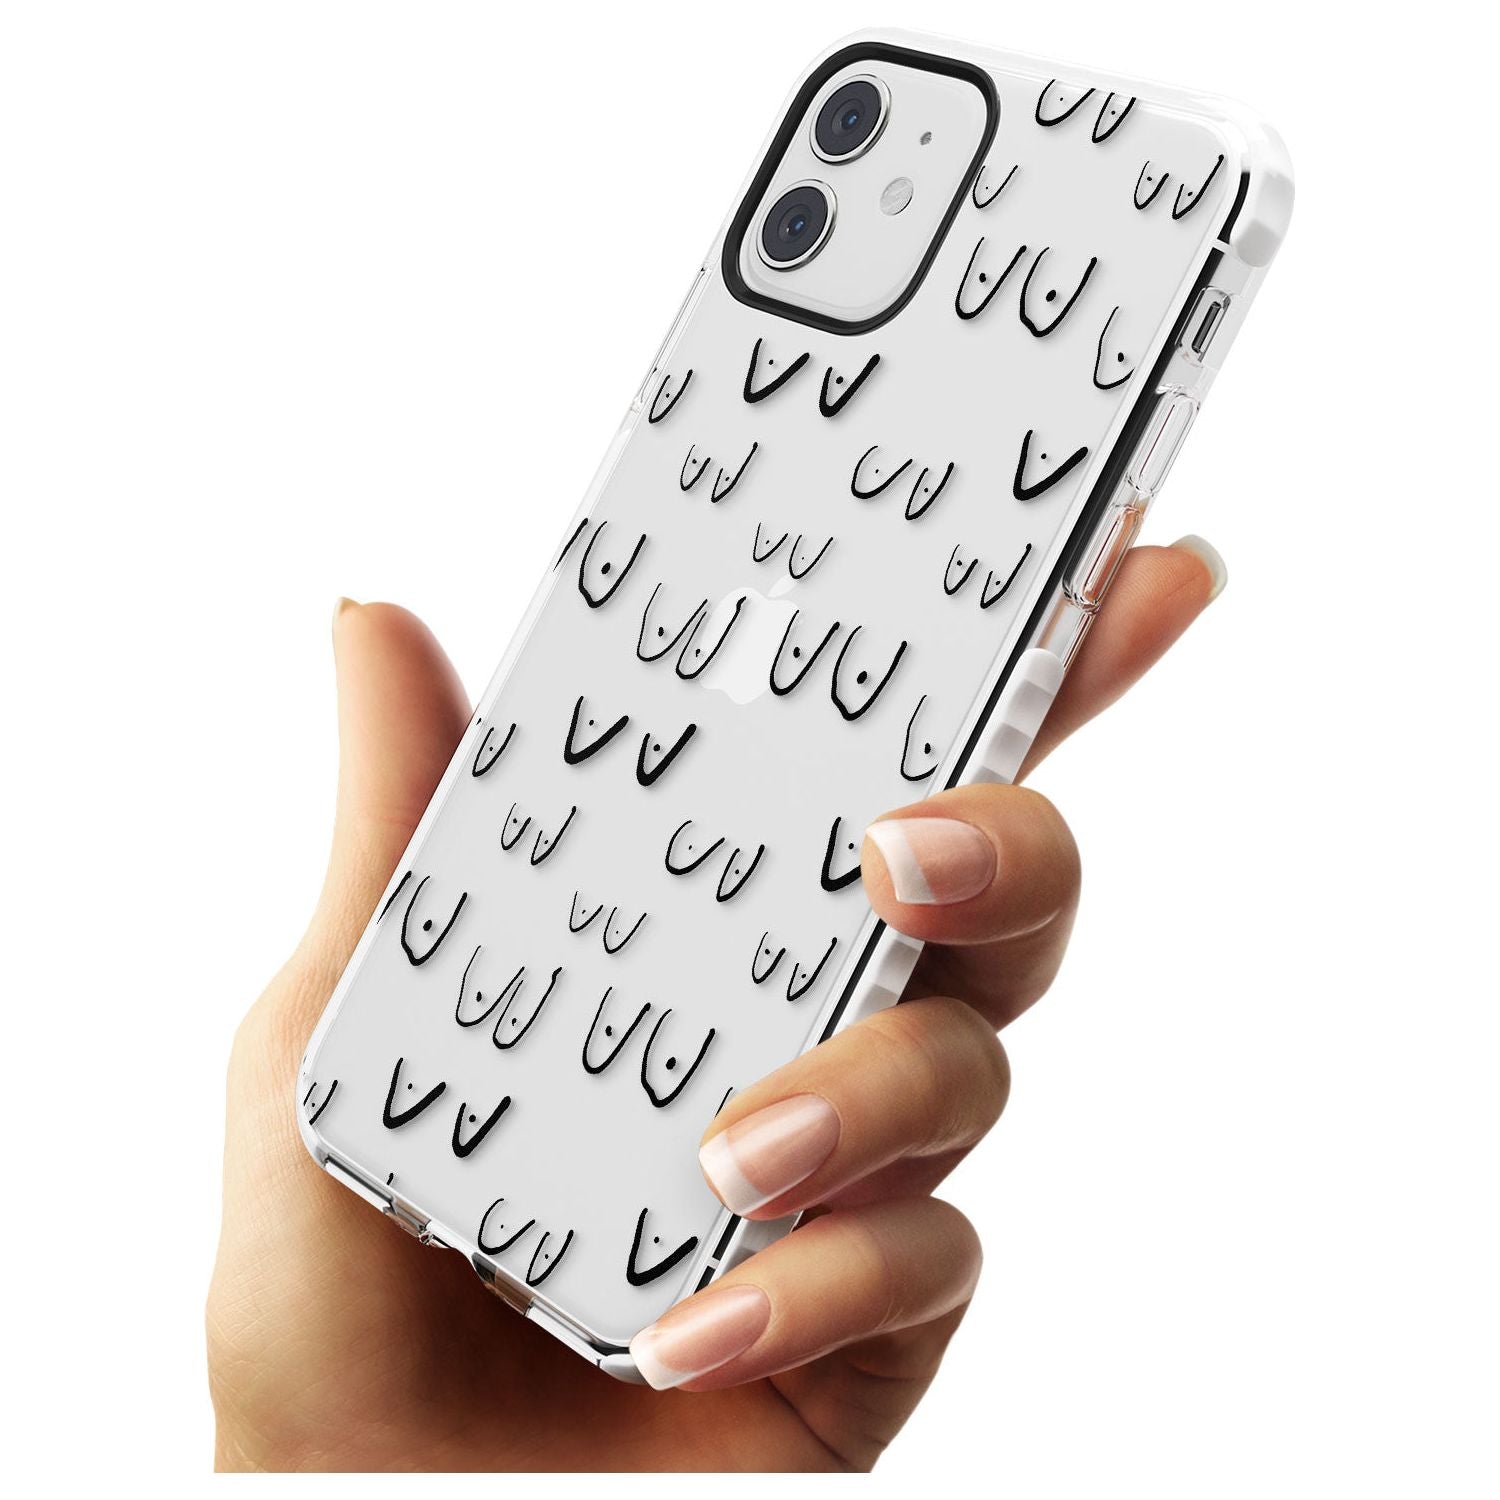 Boob Pattern (Black) Slim TPU Phone Case for iPhone 11